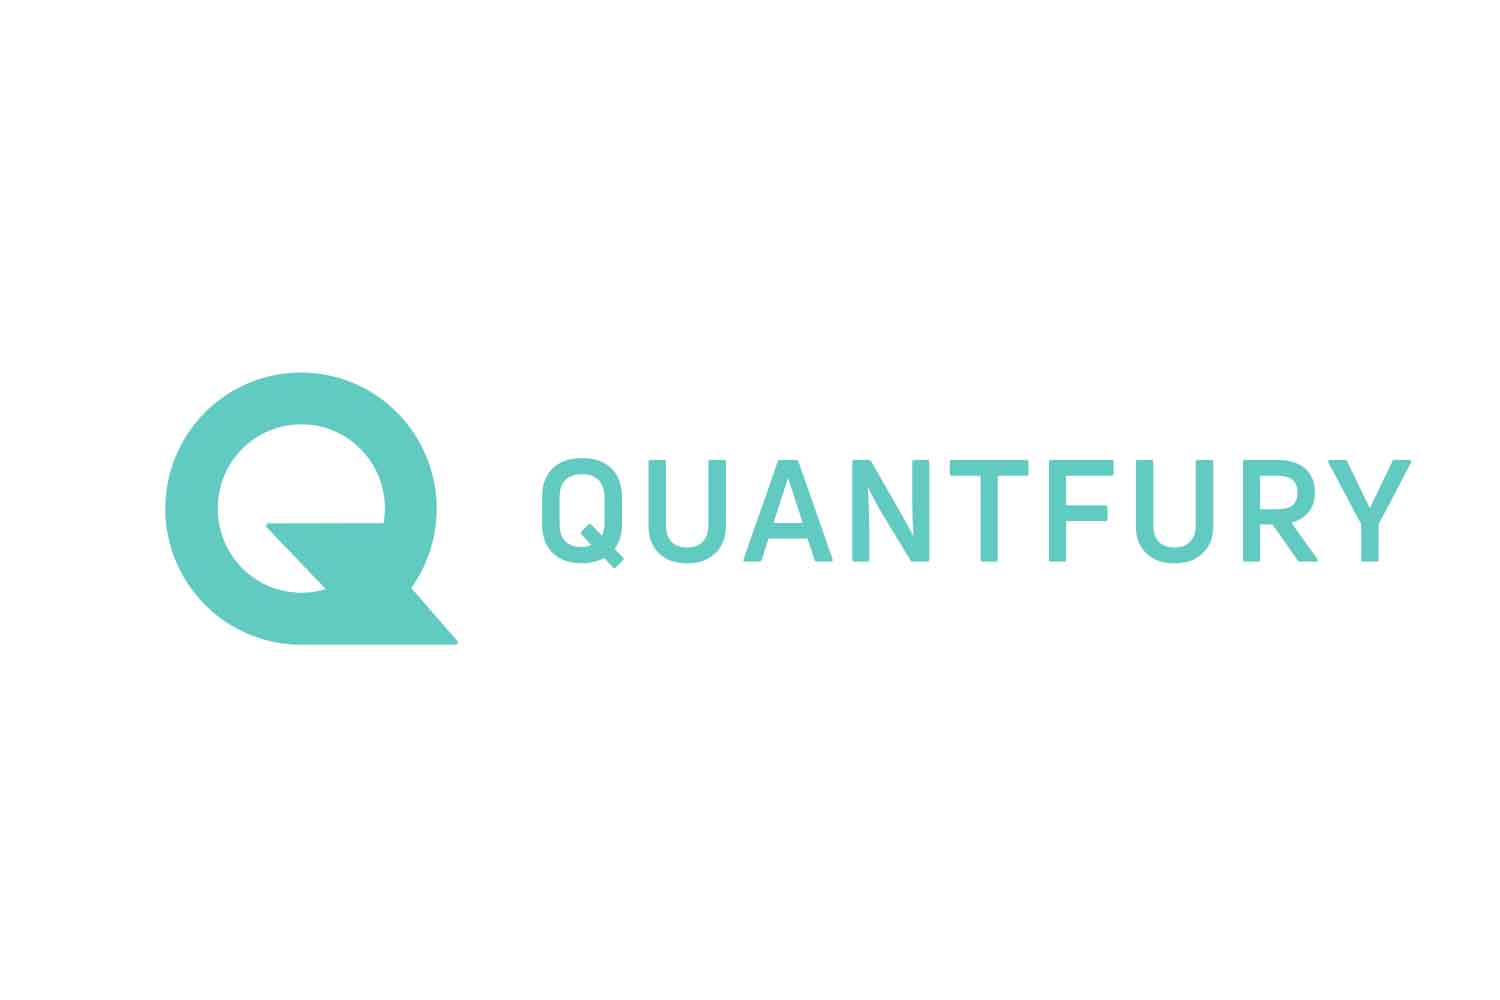 Quantfury logo